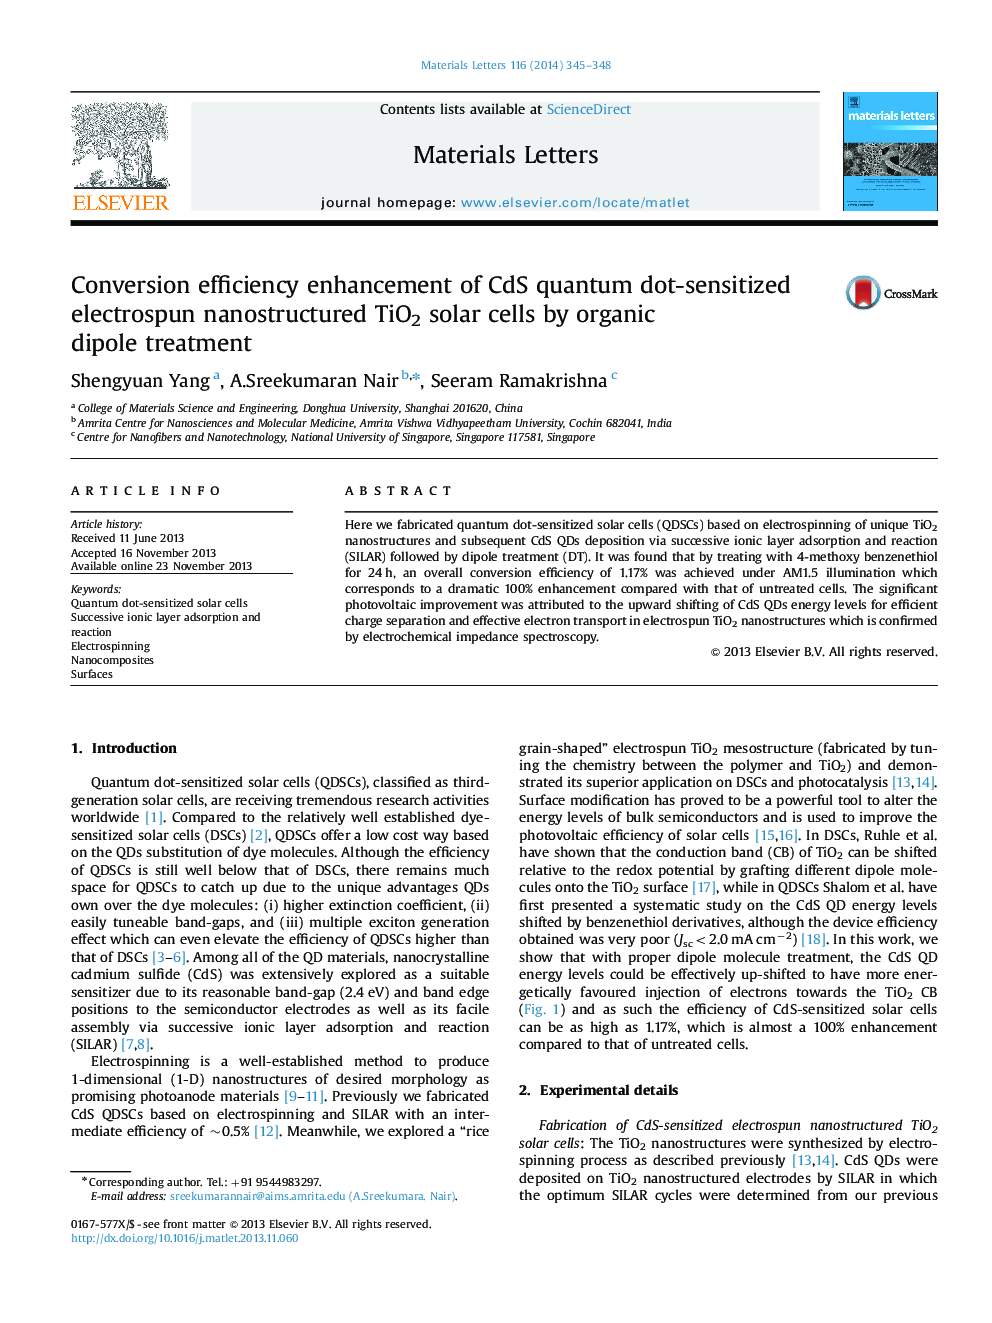 Conversion efficiency enhancement of CdS quantum dot-sensitized electrospun nanostructured TiO2 solar cells by organic dipole treatment